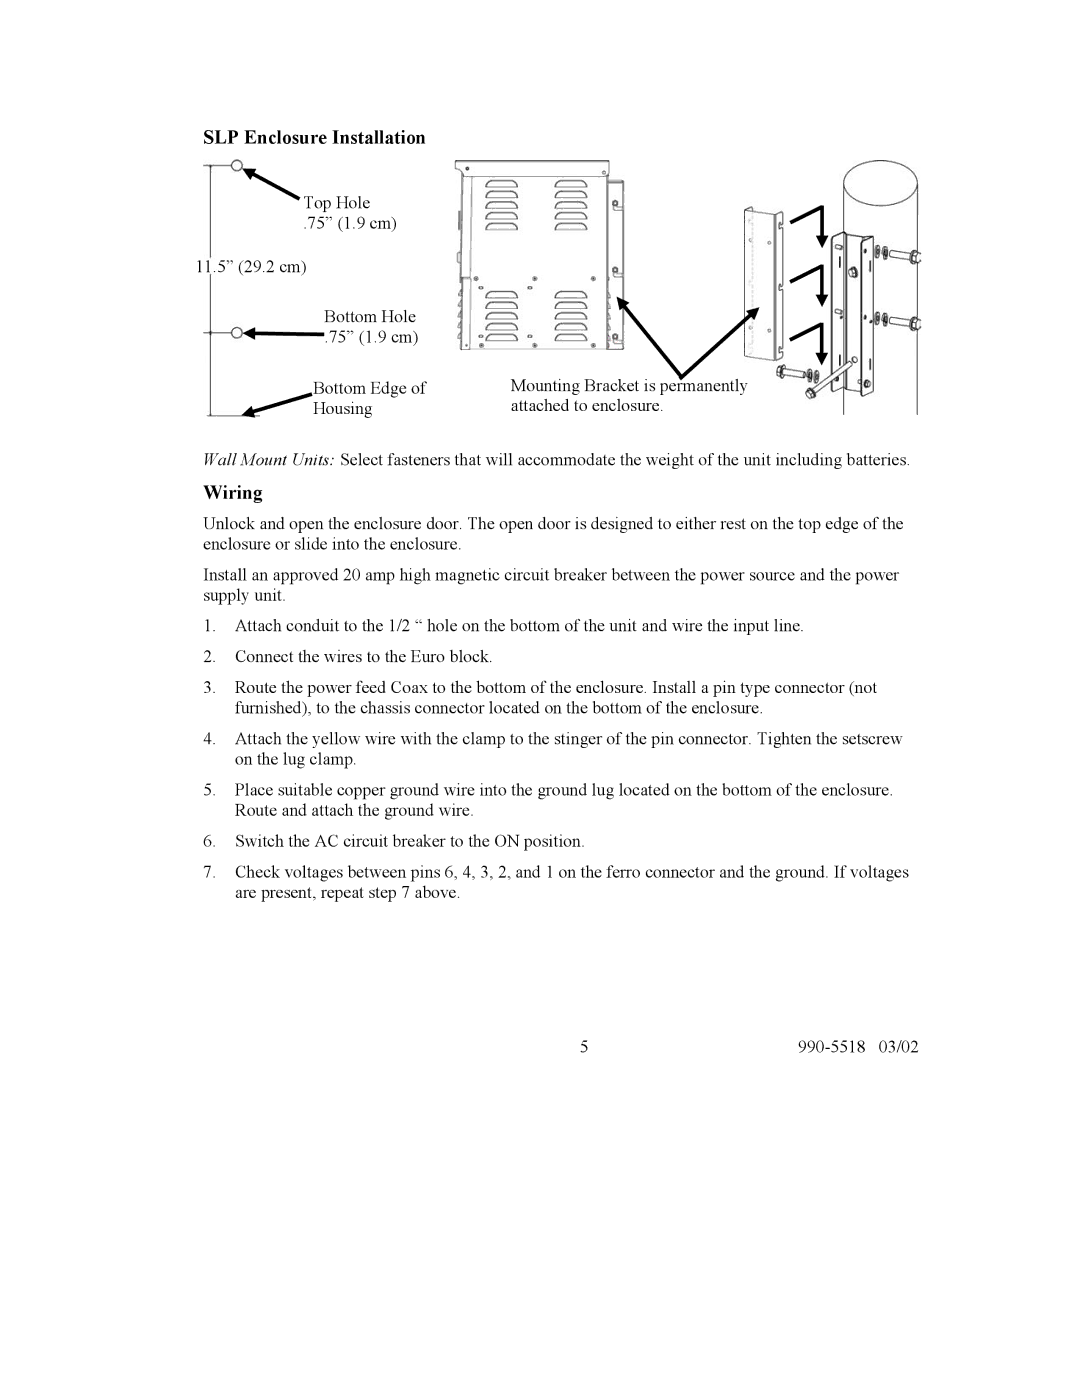 American Power Conversion CTSLP/G user manual SLP Enclosure Installation, Wiring 